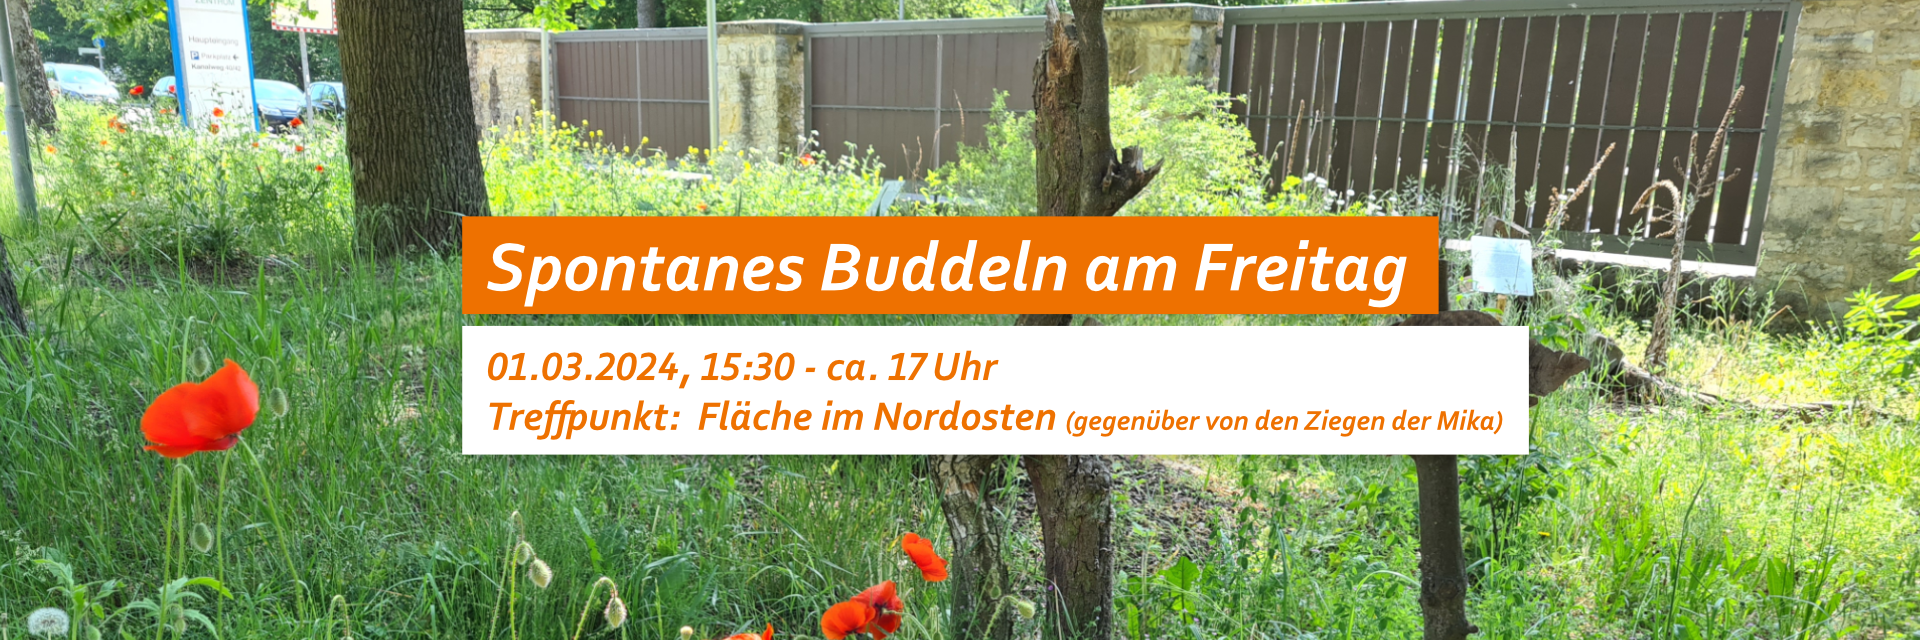 Spontanes Buddeln am Freitag, 01.03.2024